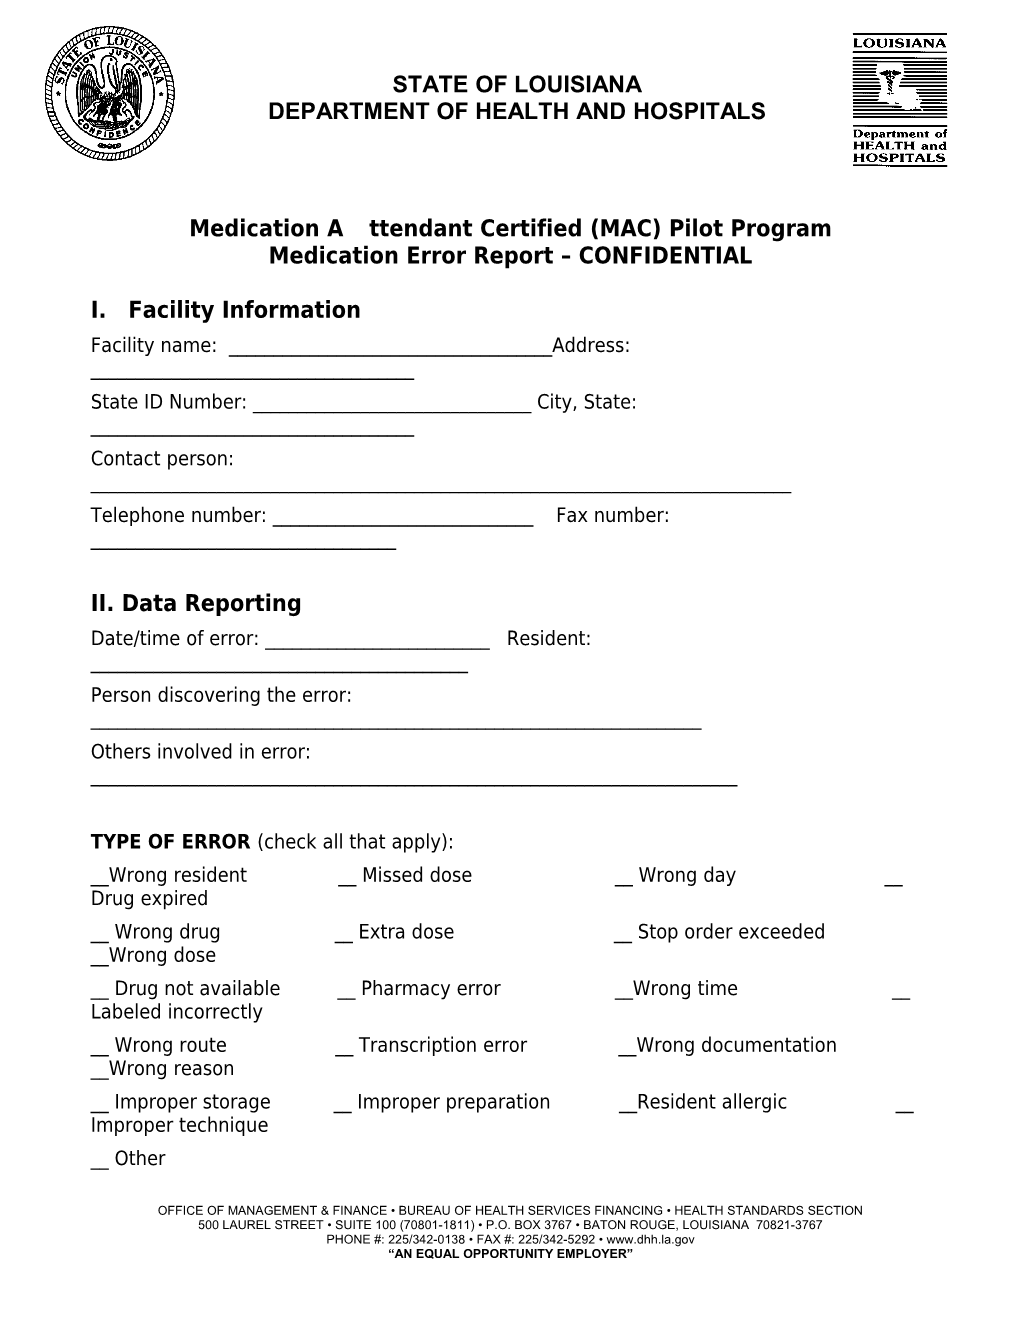 Medication Attendant Certified (MAC) Pilot Program